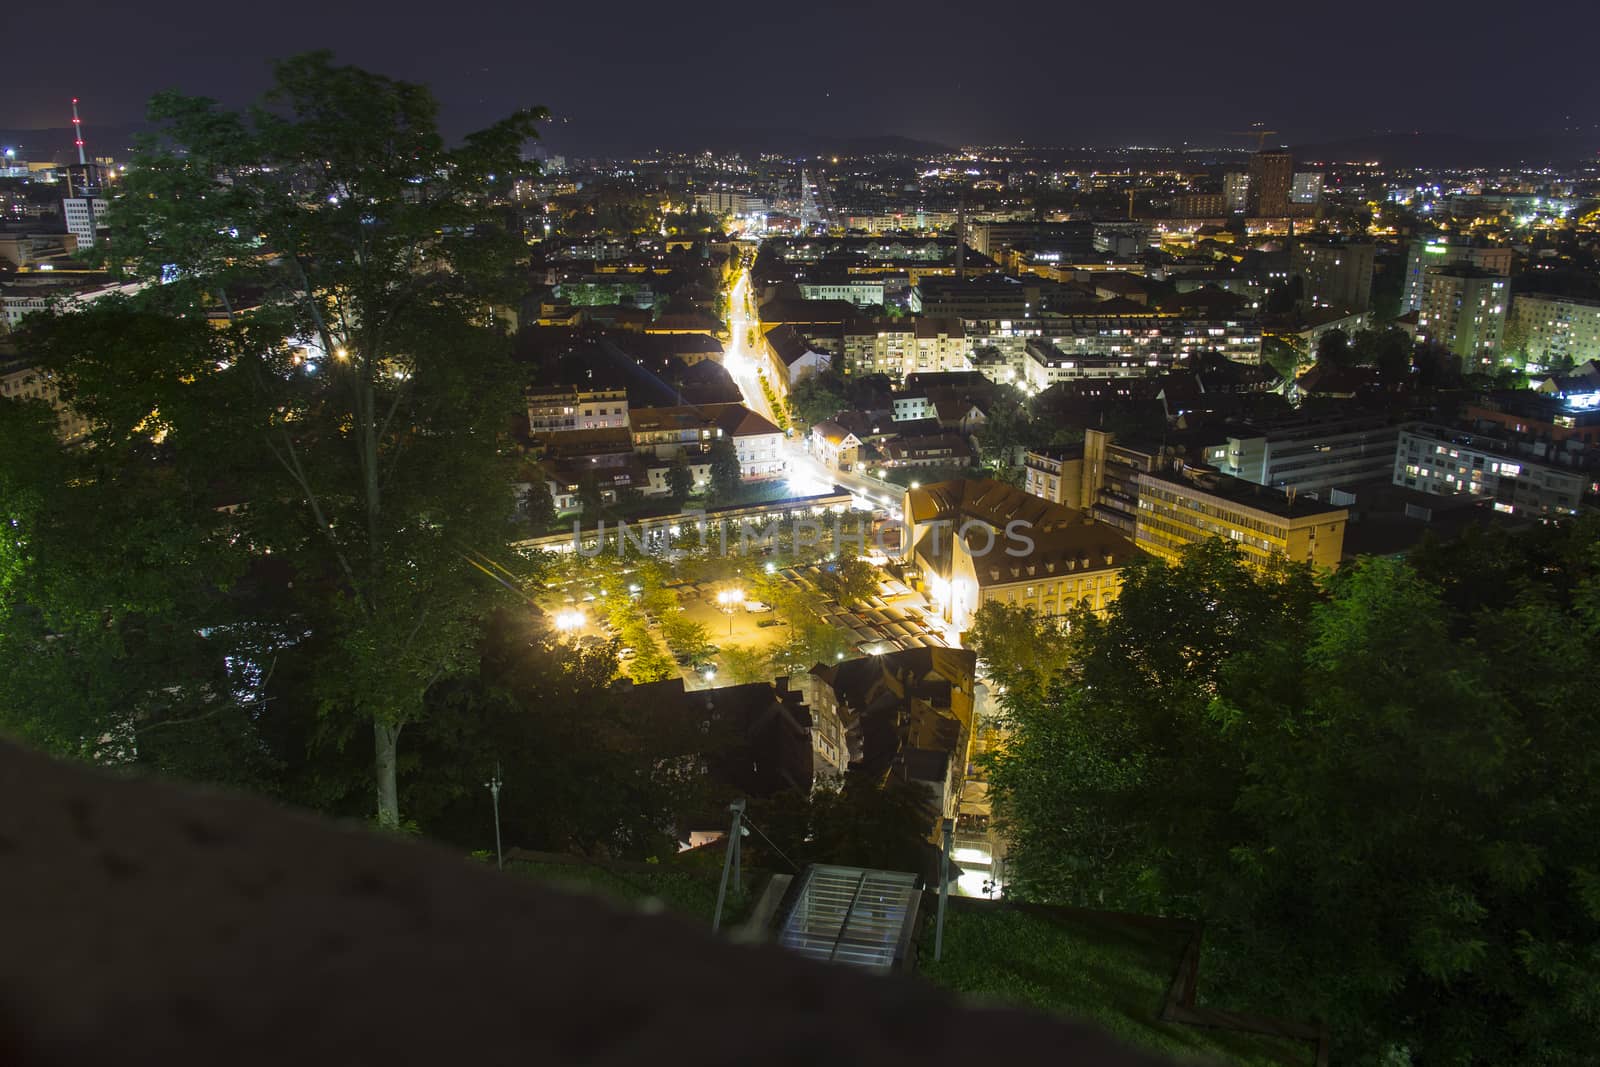 Slovenian capital Ljubljana at night from the castle.